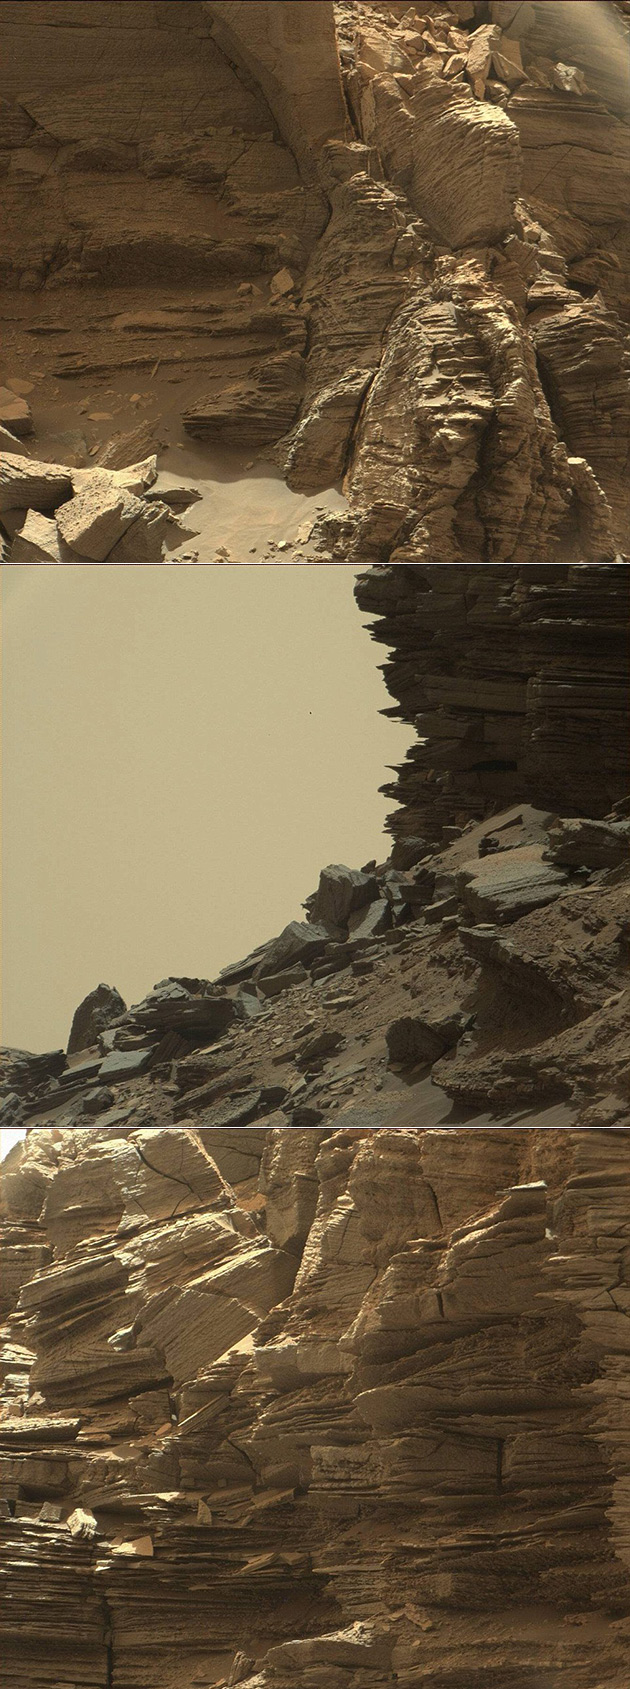 New Mars Photos